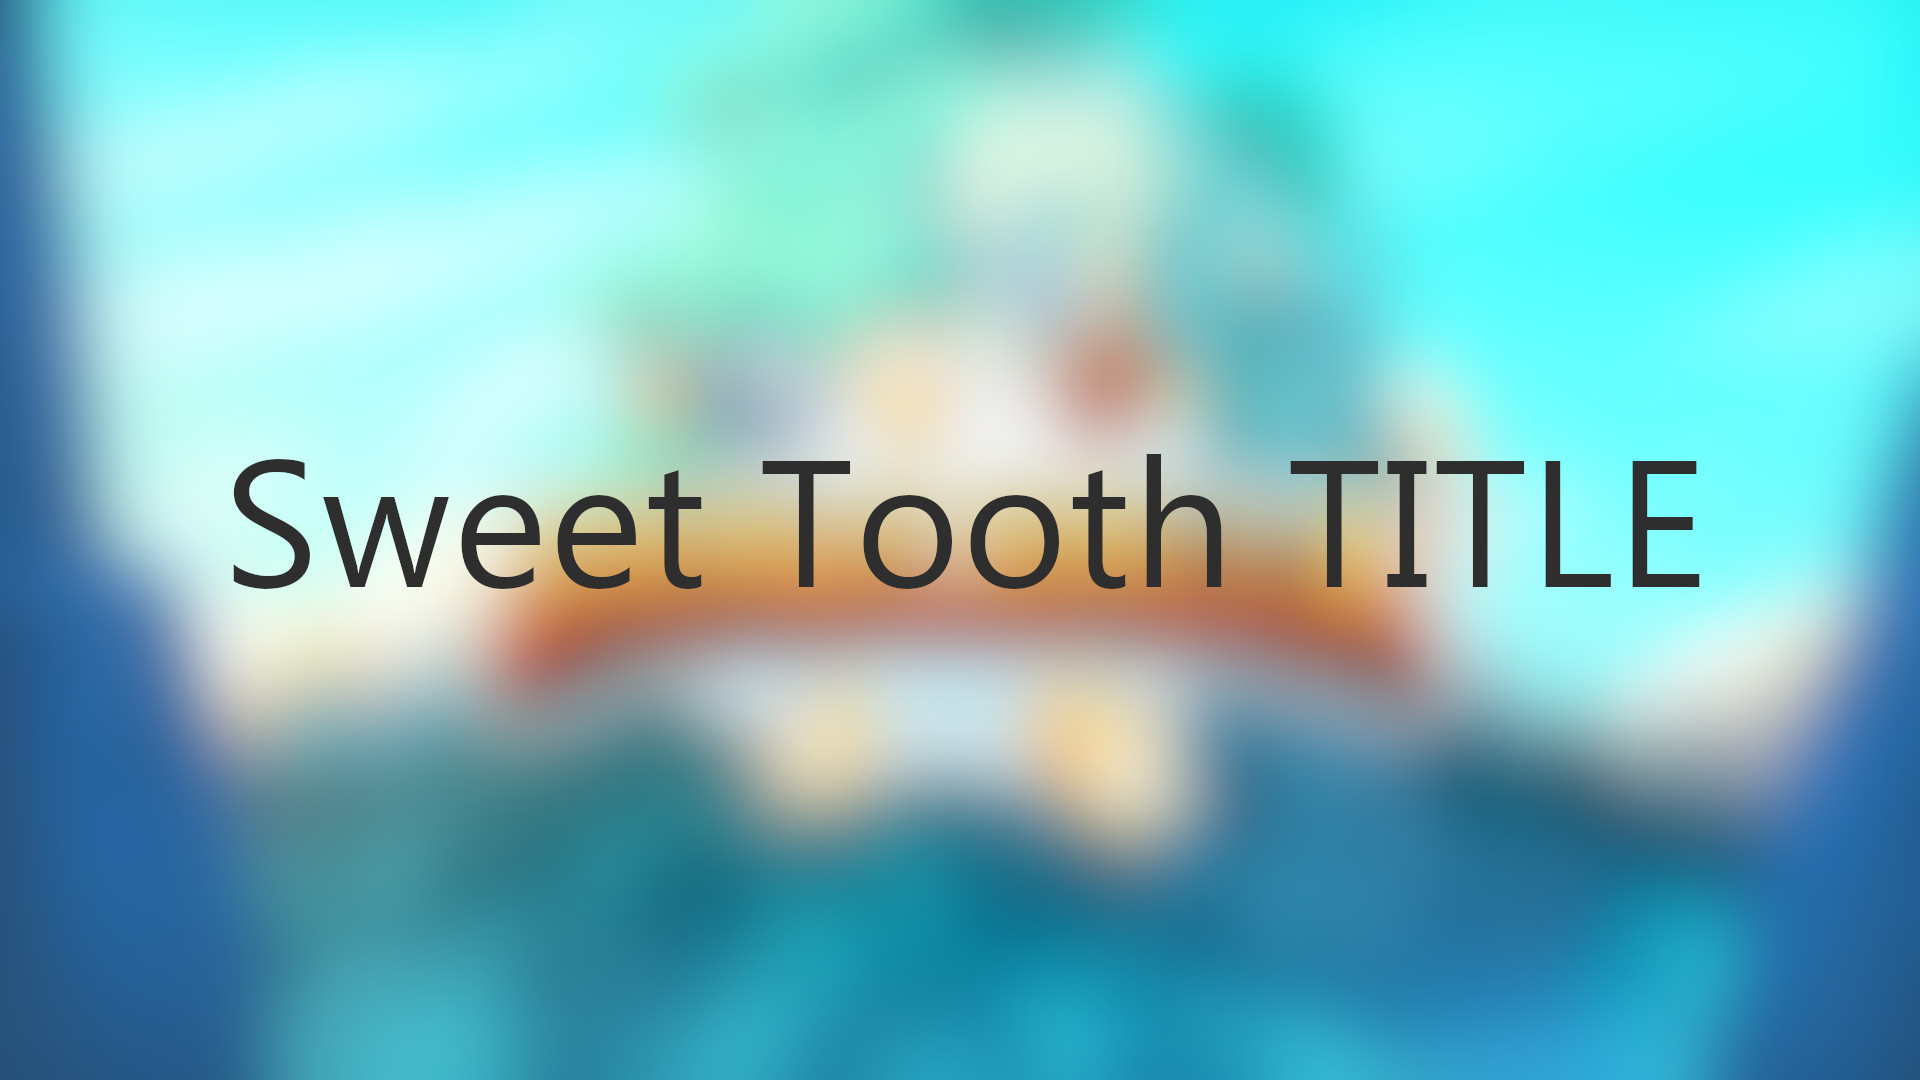 [$ 1.12] Brawlhalla - Sweet Tooth Title DLC CD Key